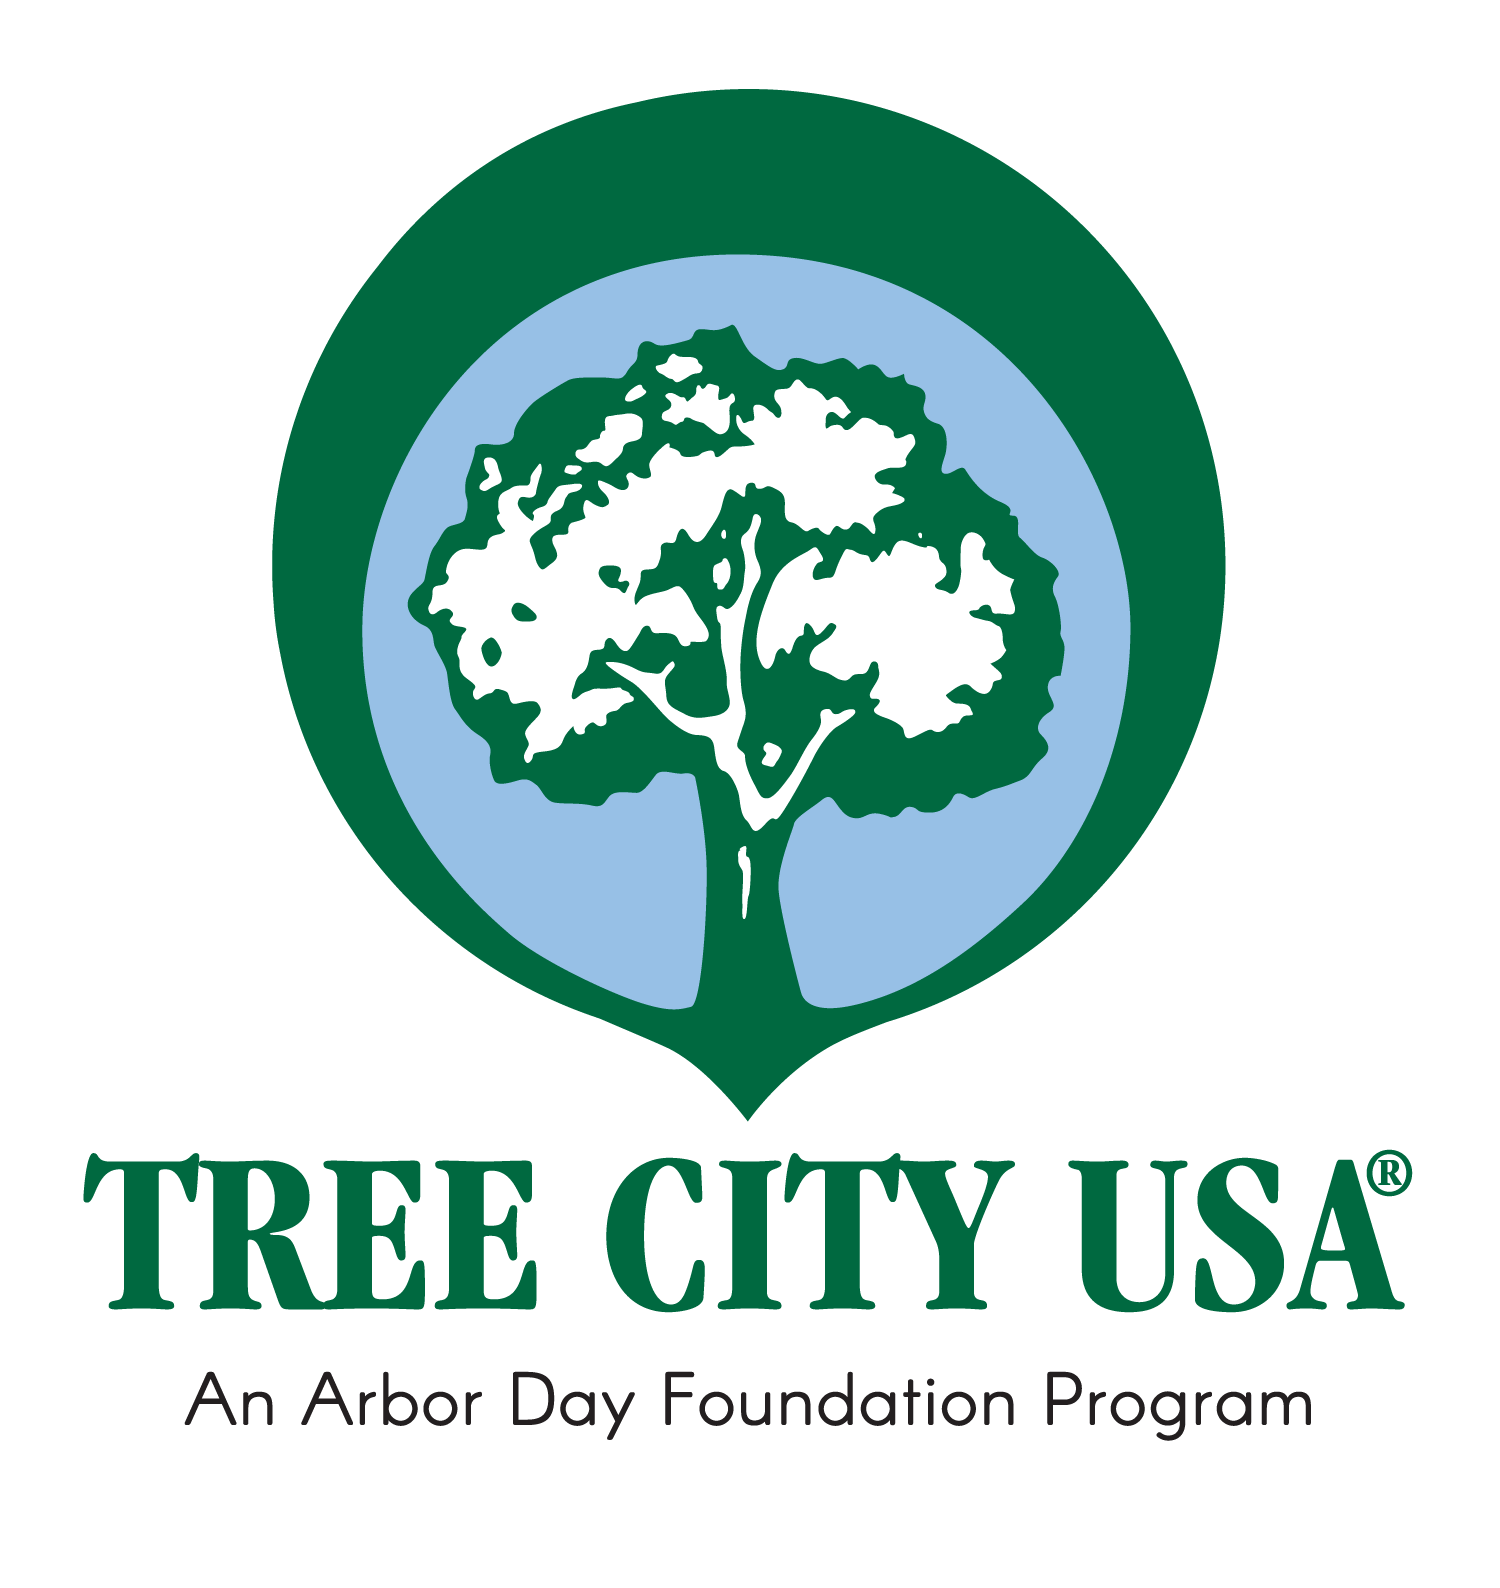 Tree City USA An Arbor Day Foundation Program